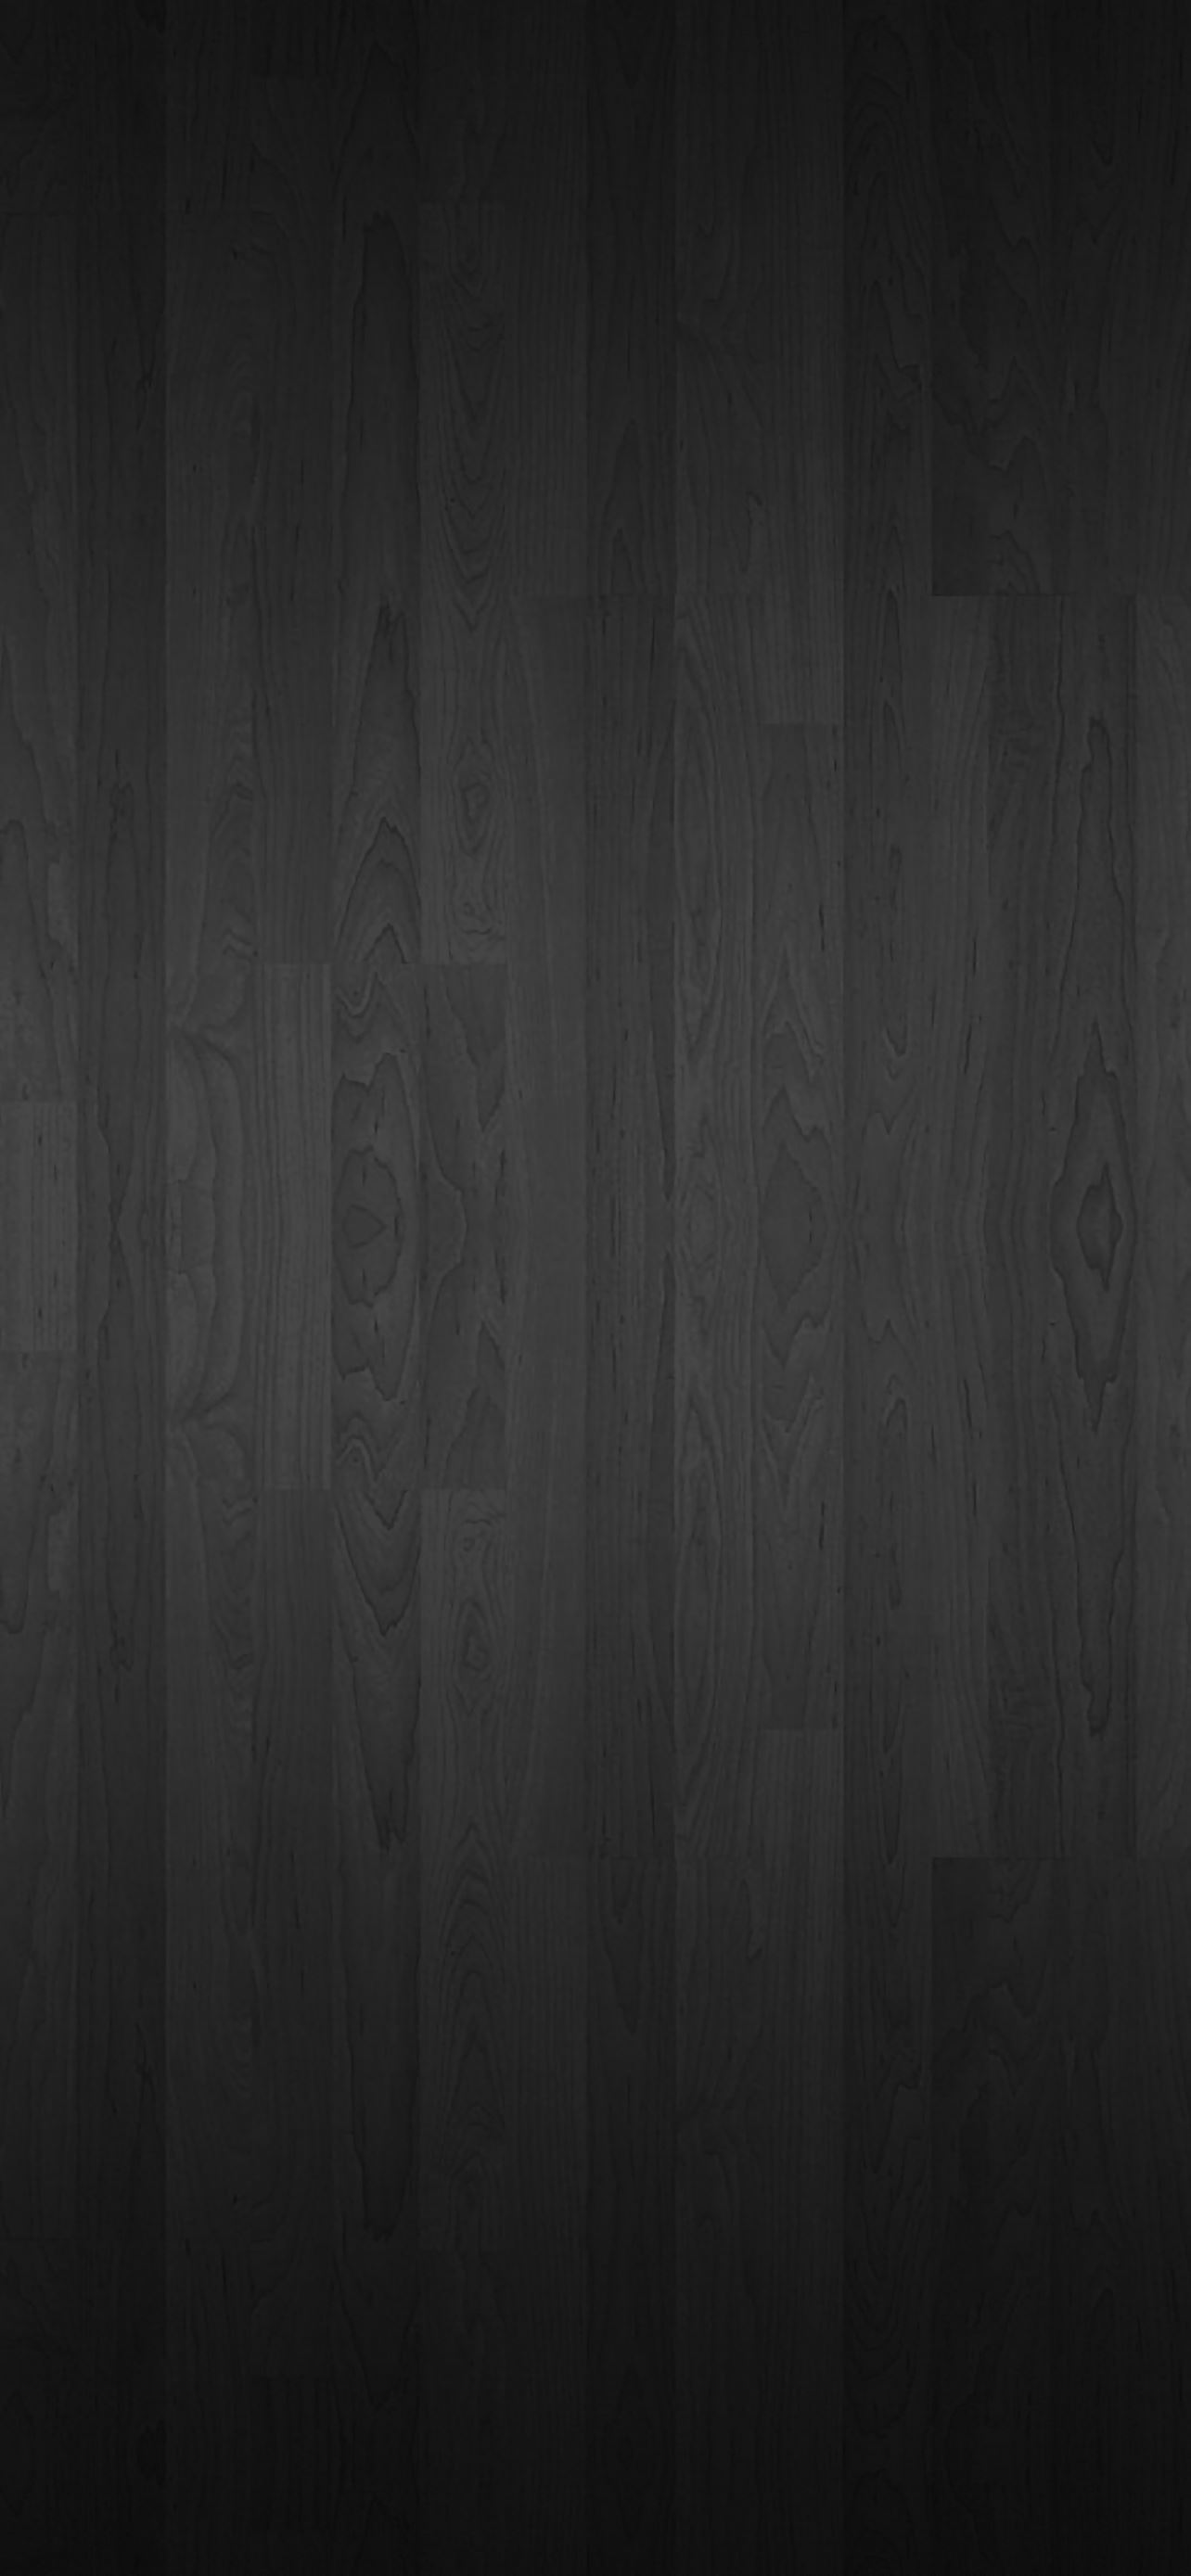 Dark Wood Texture iPhone Wallpapers Free Download